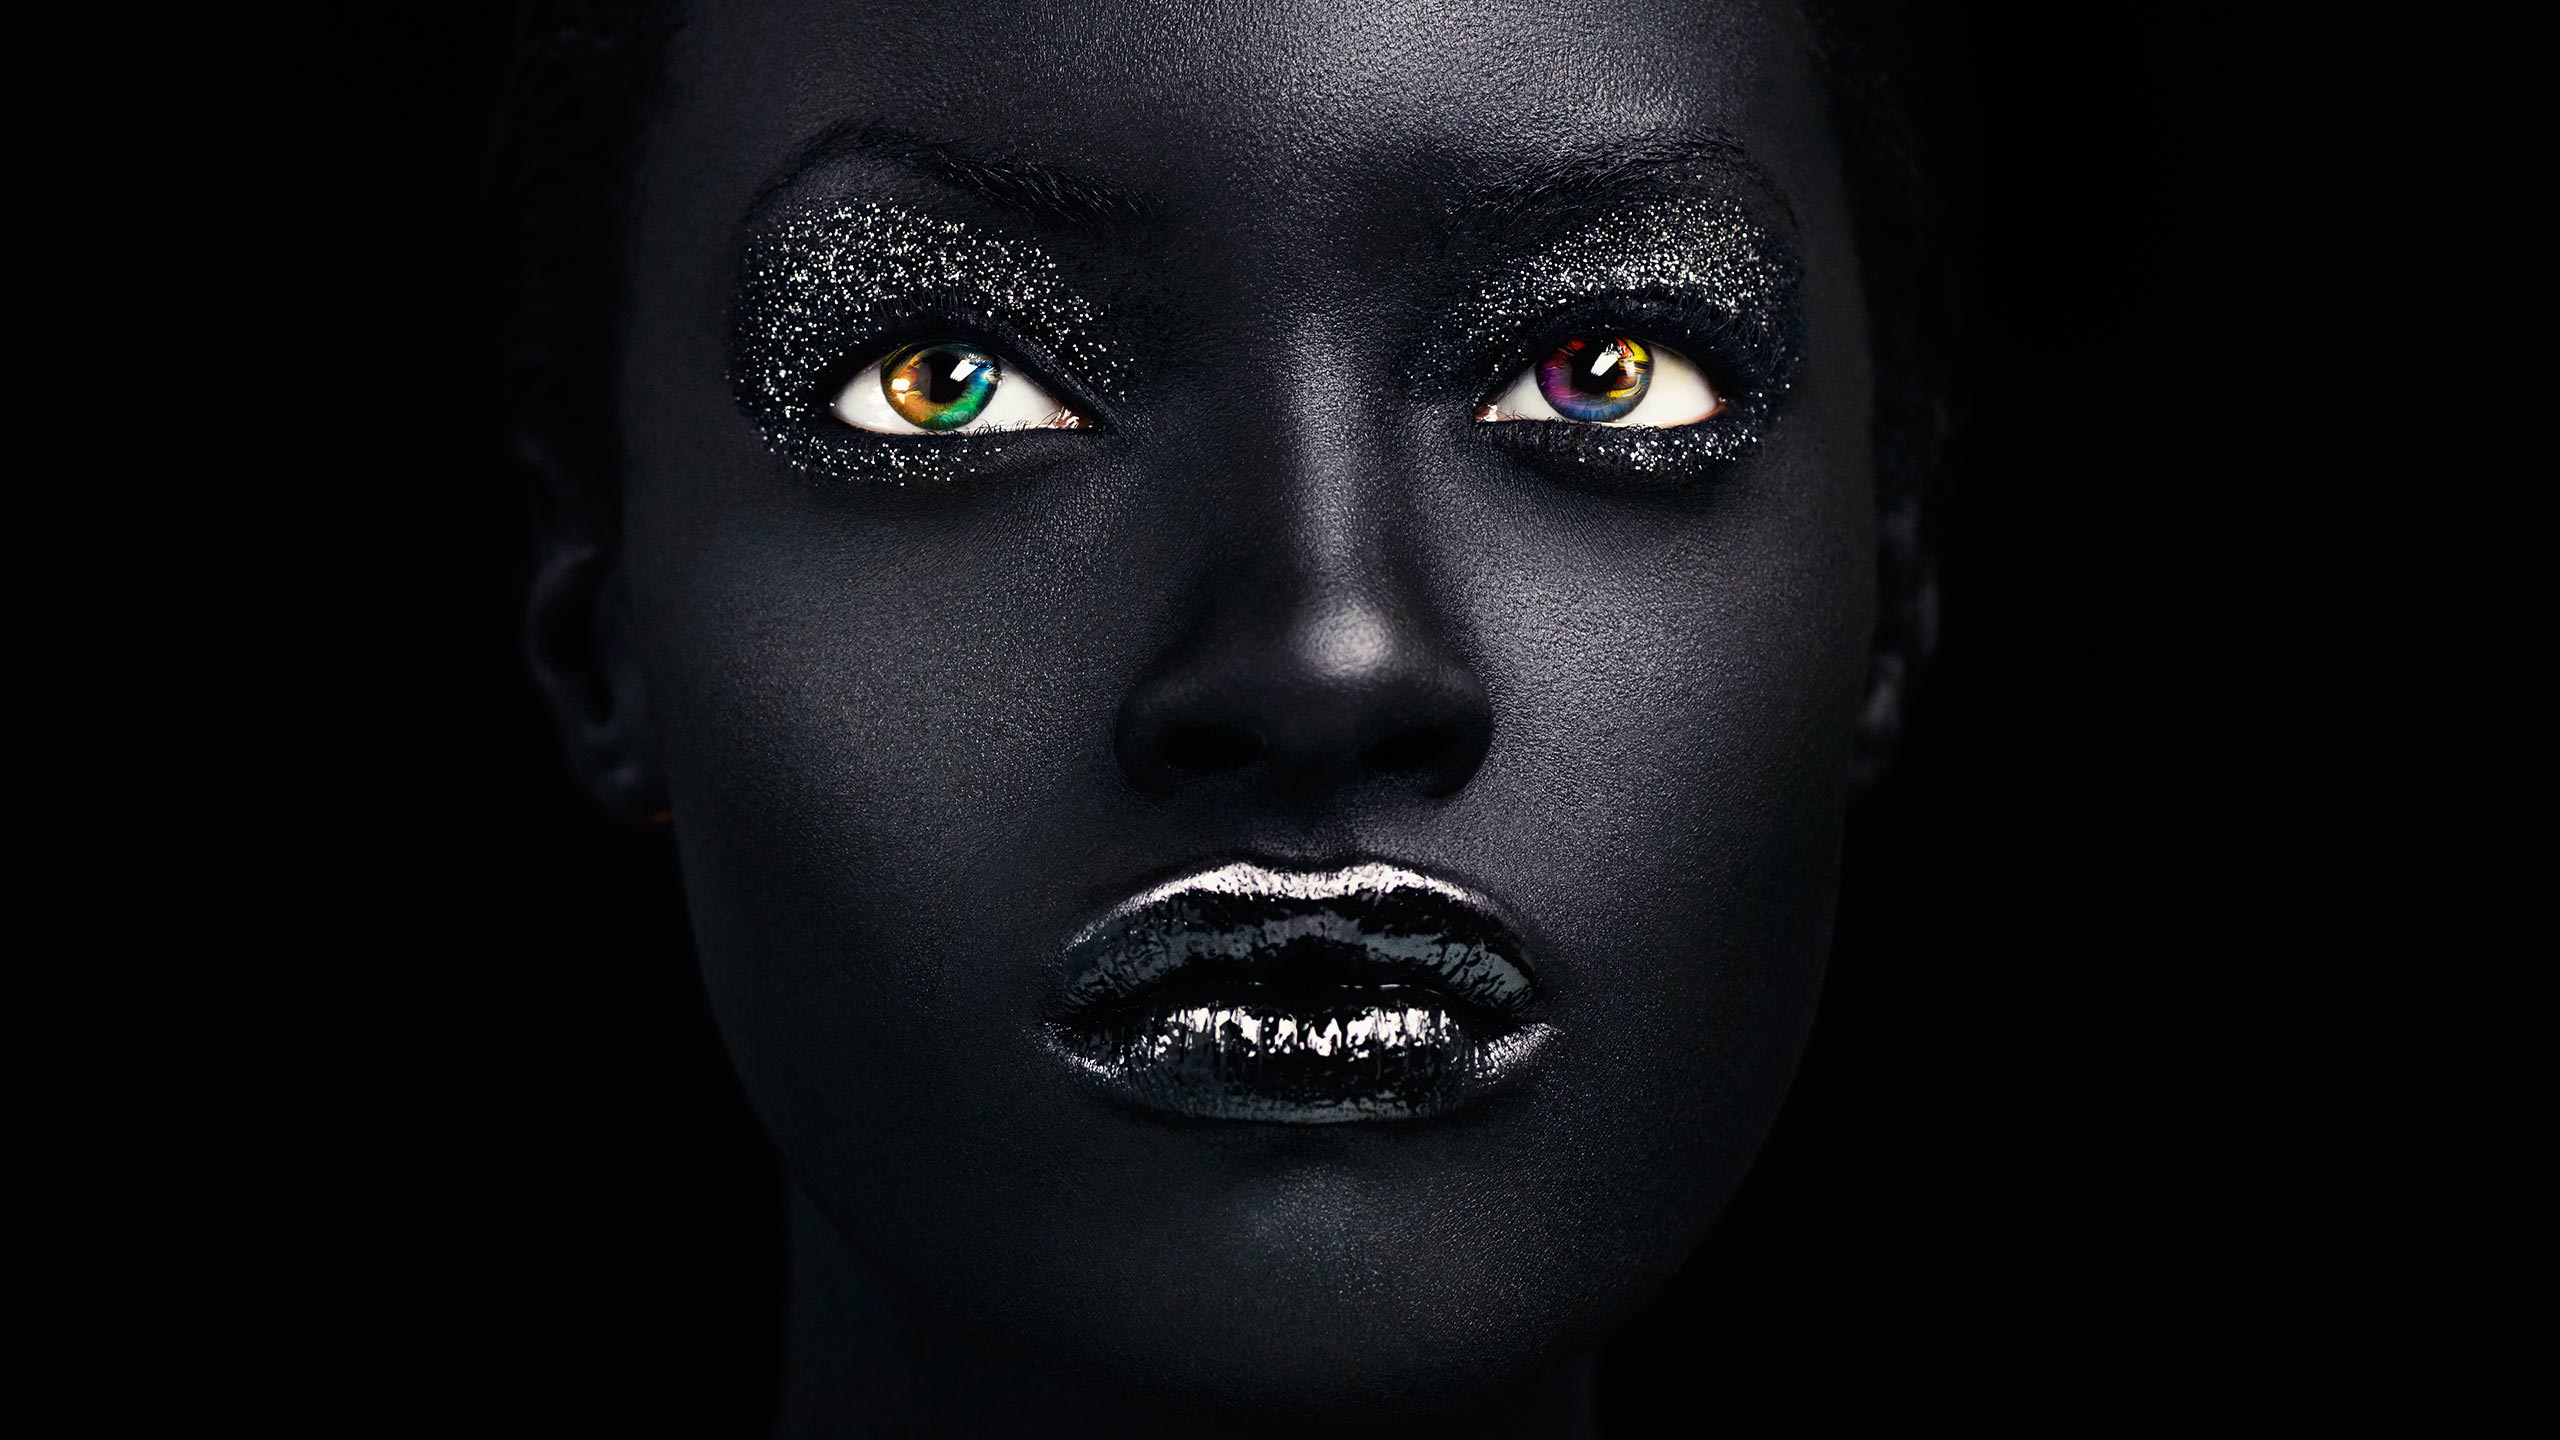 Adobe CS6 Hero Face of Black Woman, White eyes